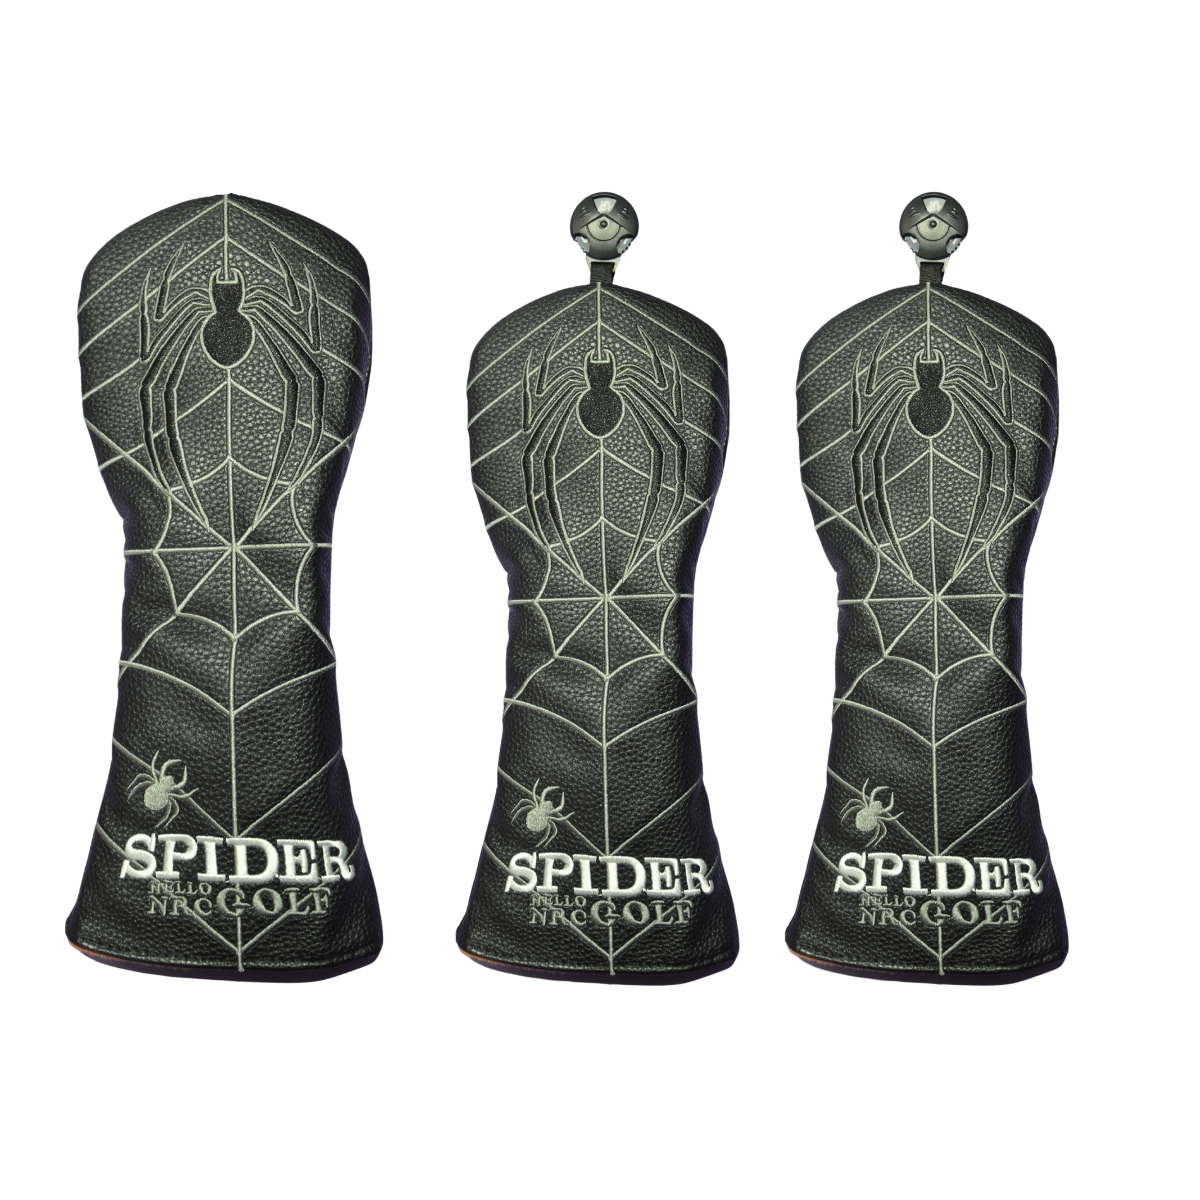 Spider Wood Head Covers (Set of 3 pcs)